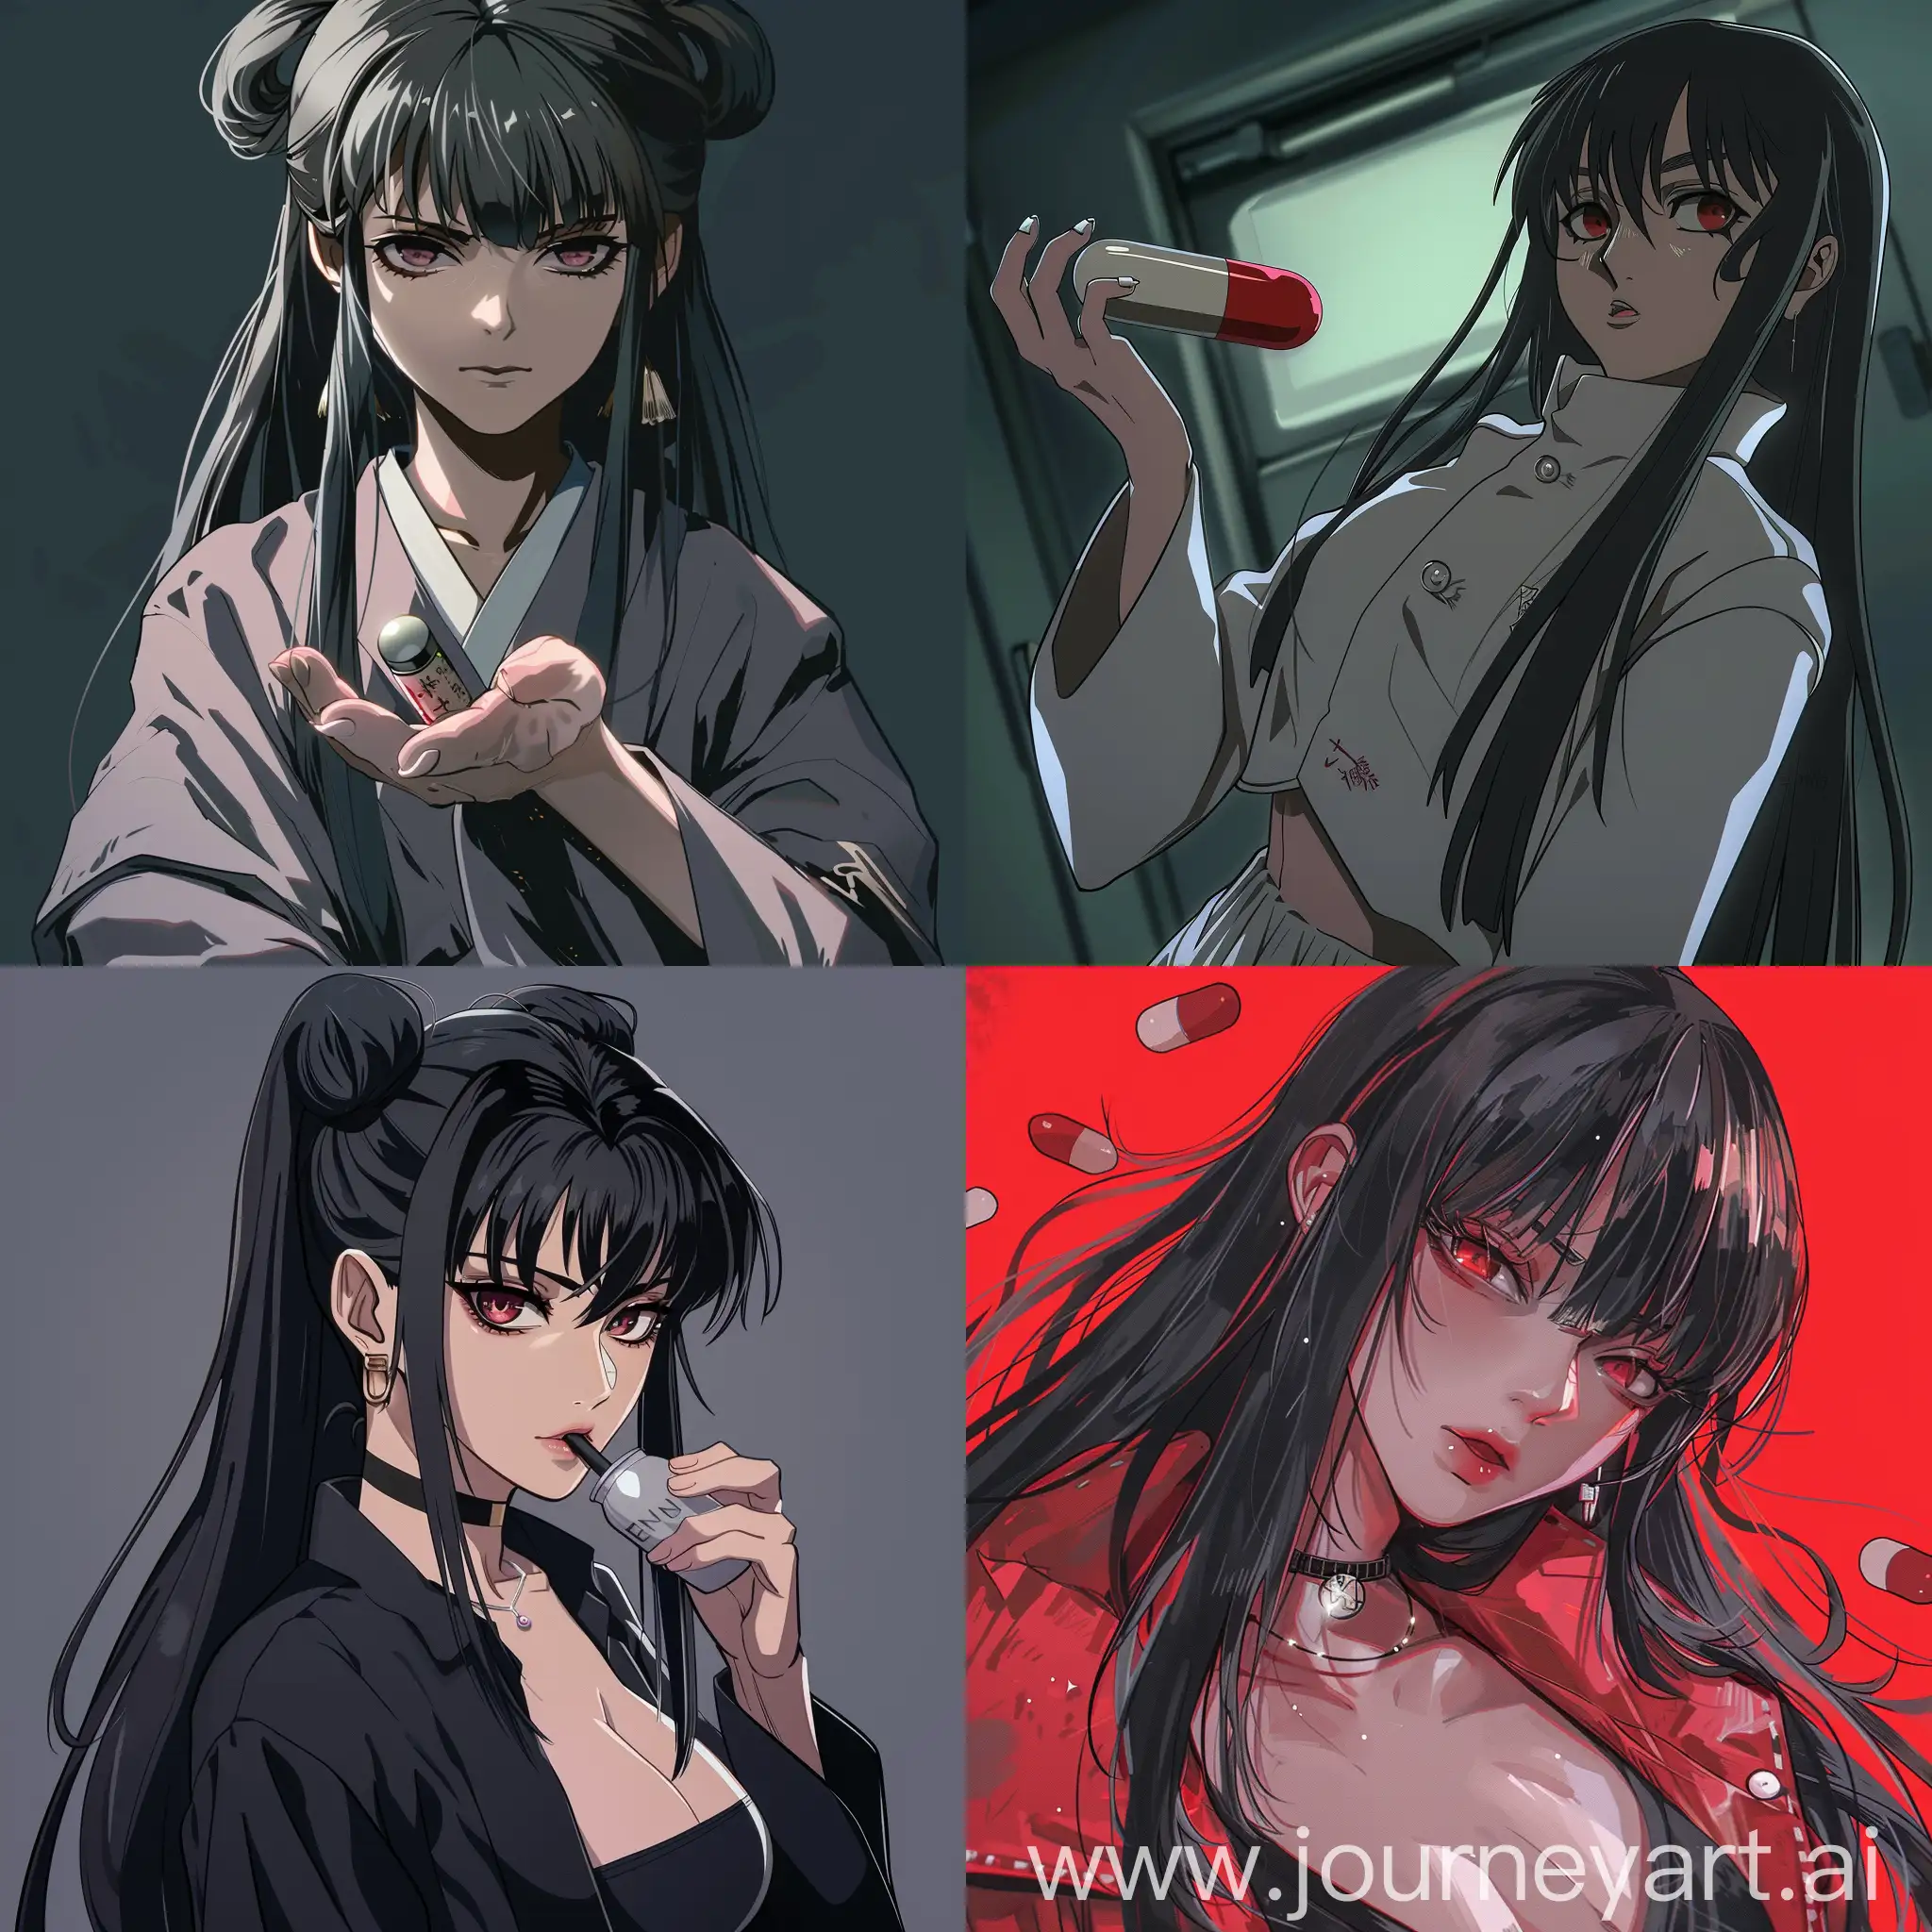 Female-Anime-Character-with-Enmas-Killing-Pill-Inuyasha-Inspired-Artwork